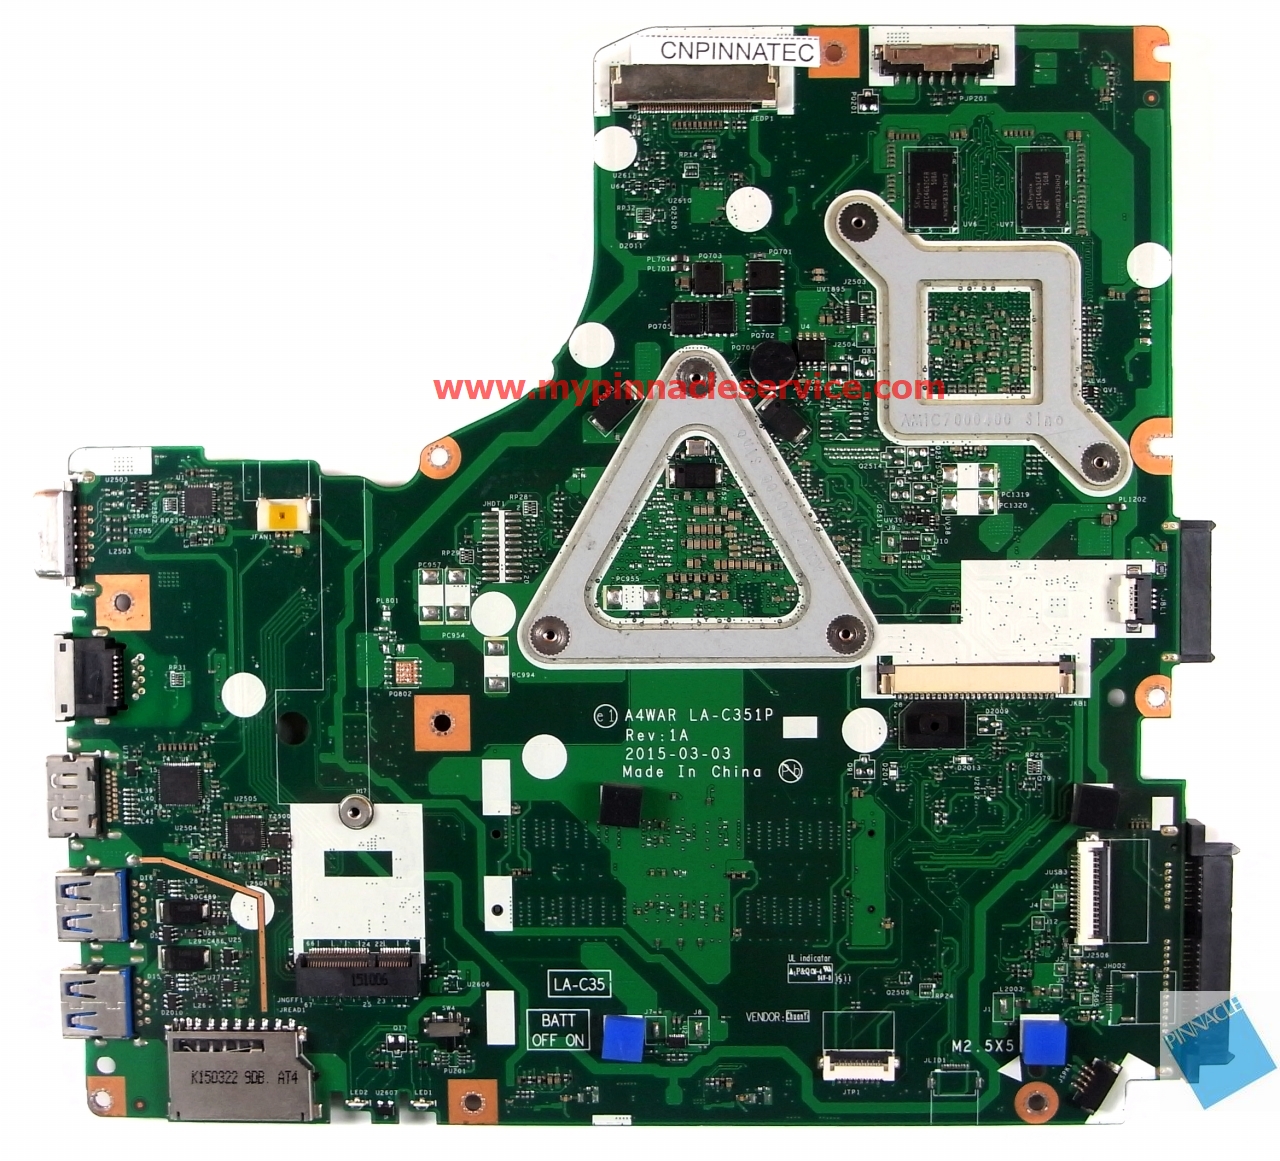 nbmyc11001-motherboard-for-acer-aspire-e5-422g-a4war-la-c351p-r0013191.jpg